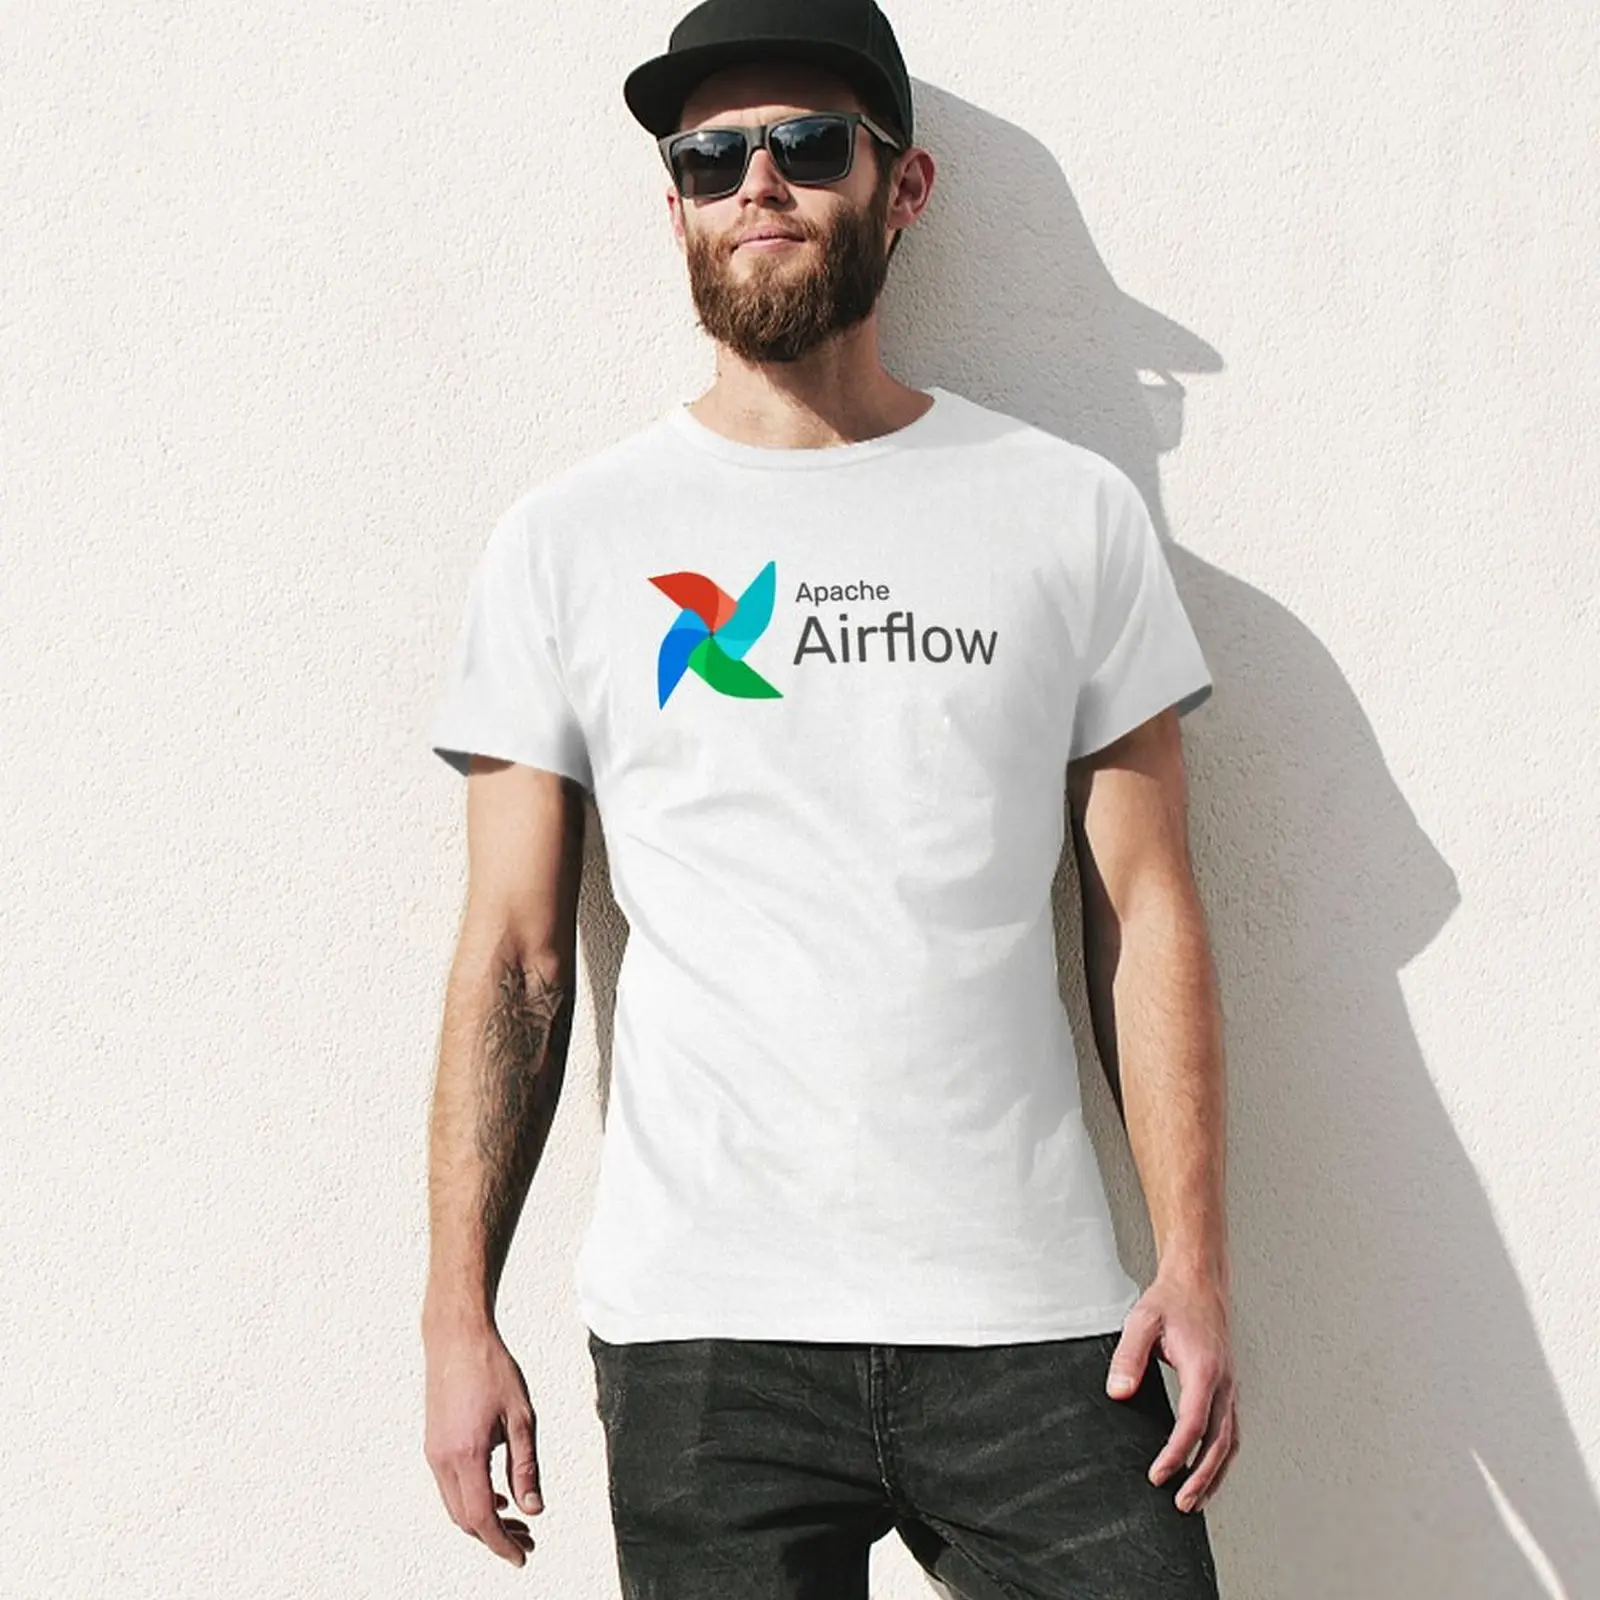 Apache Airflow T-Shirt plain hippie clothes mens t shirts casual stylish